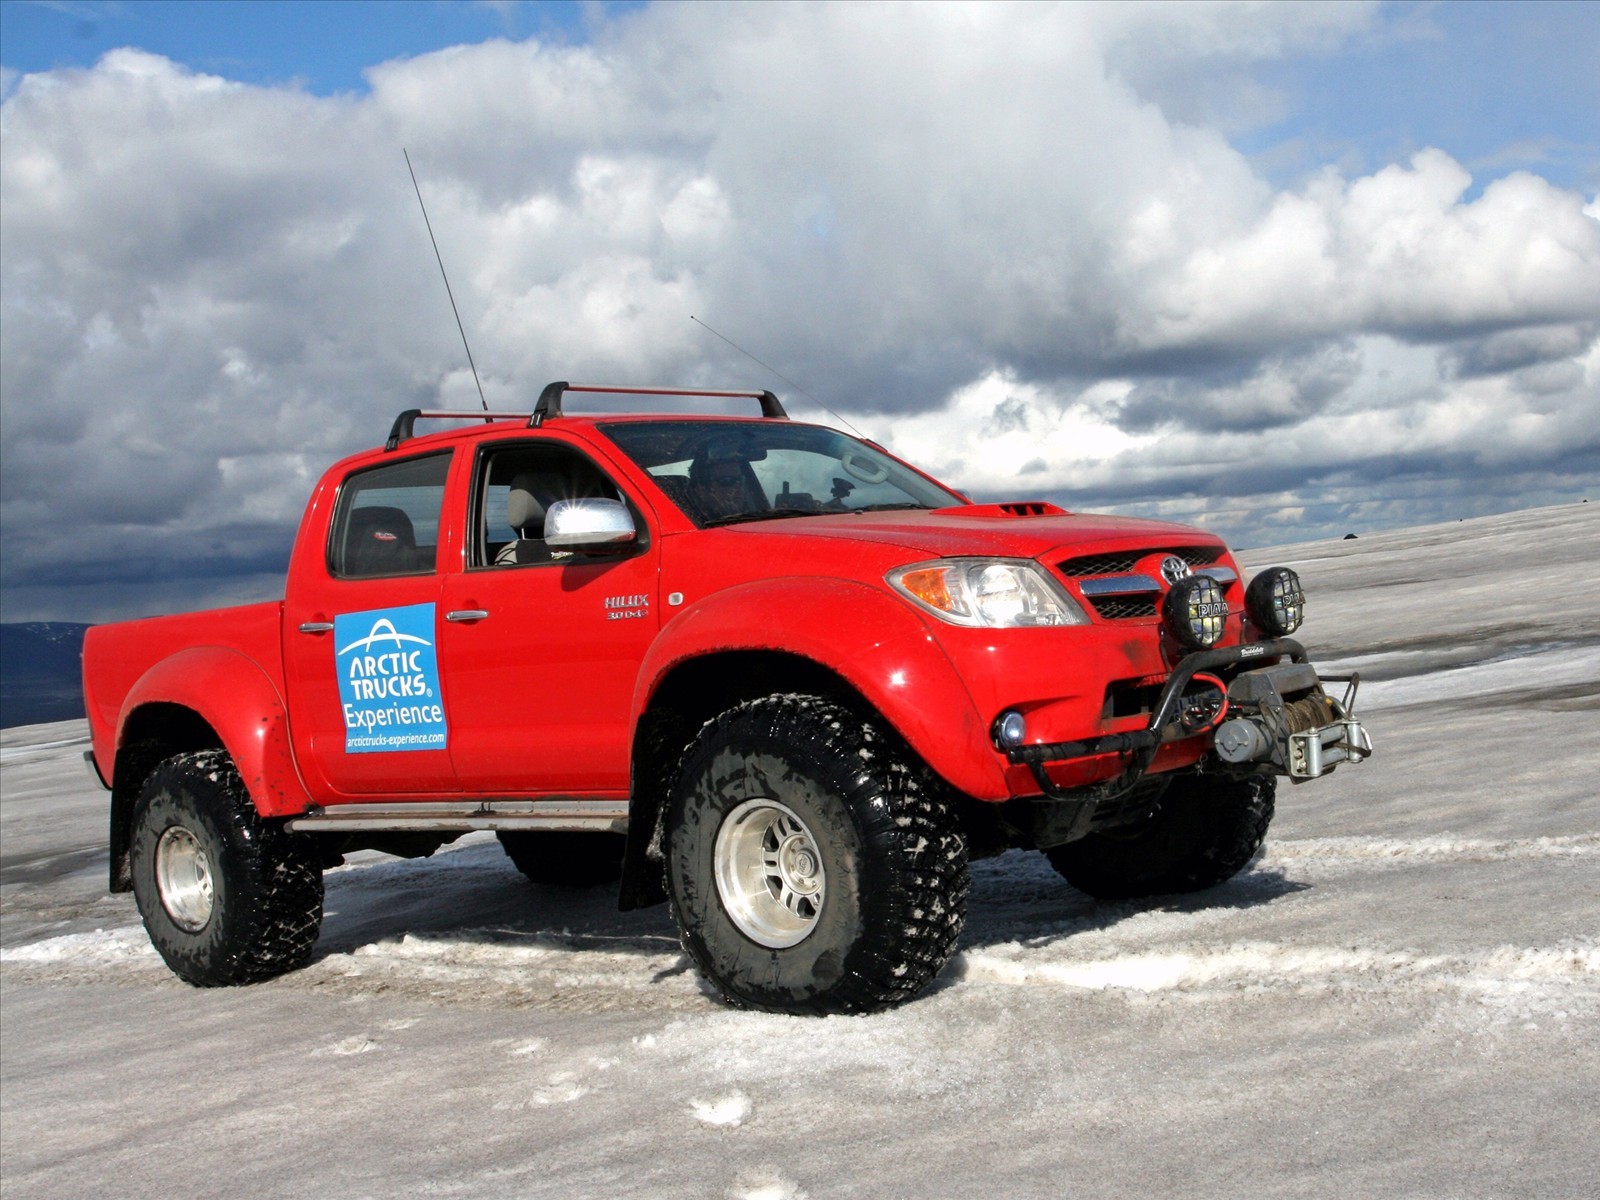 toyota arctic truck #1